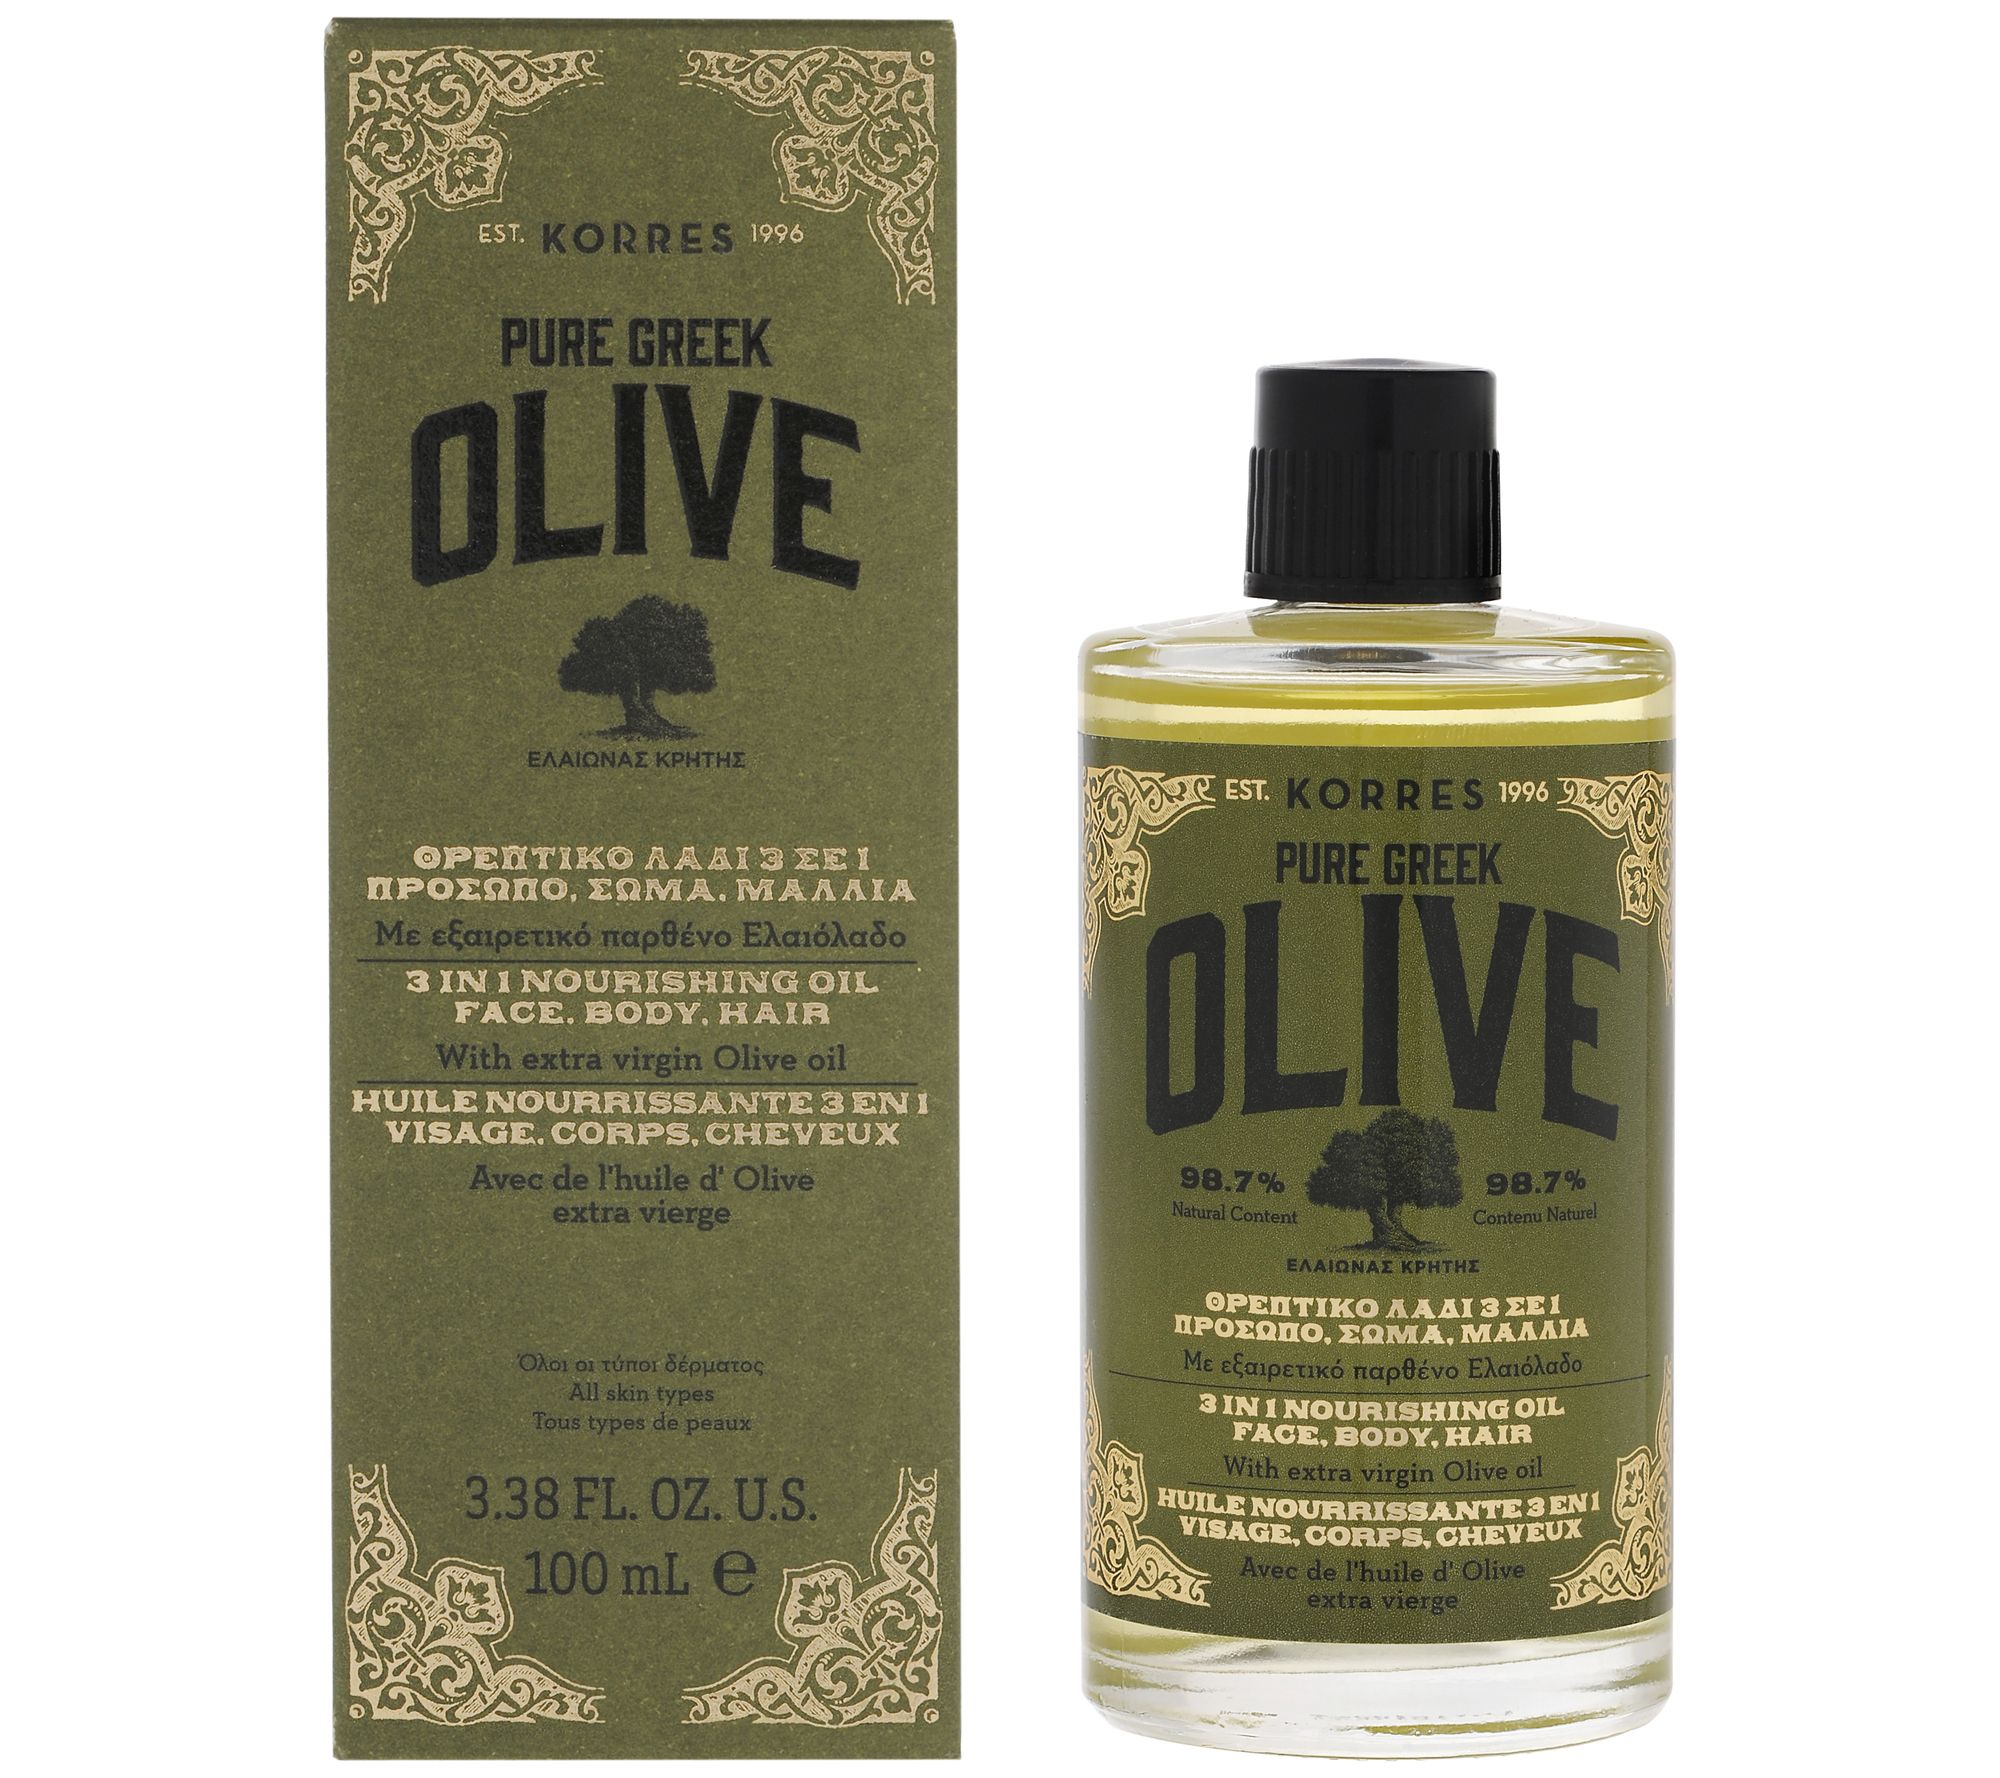 Olive Virgin Oil – 100% Organic Facial Moisturizer